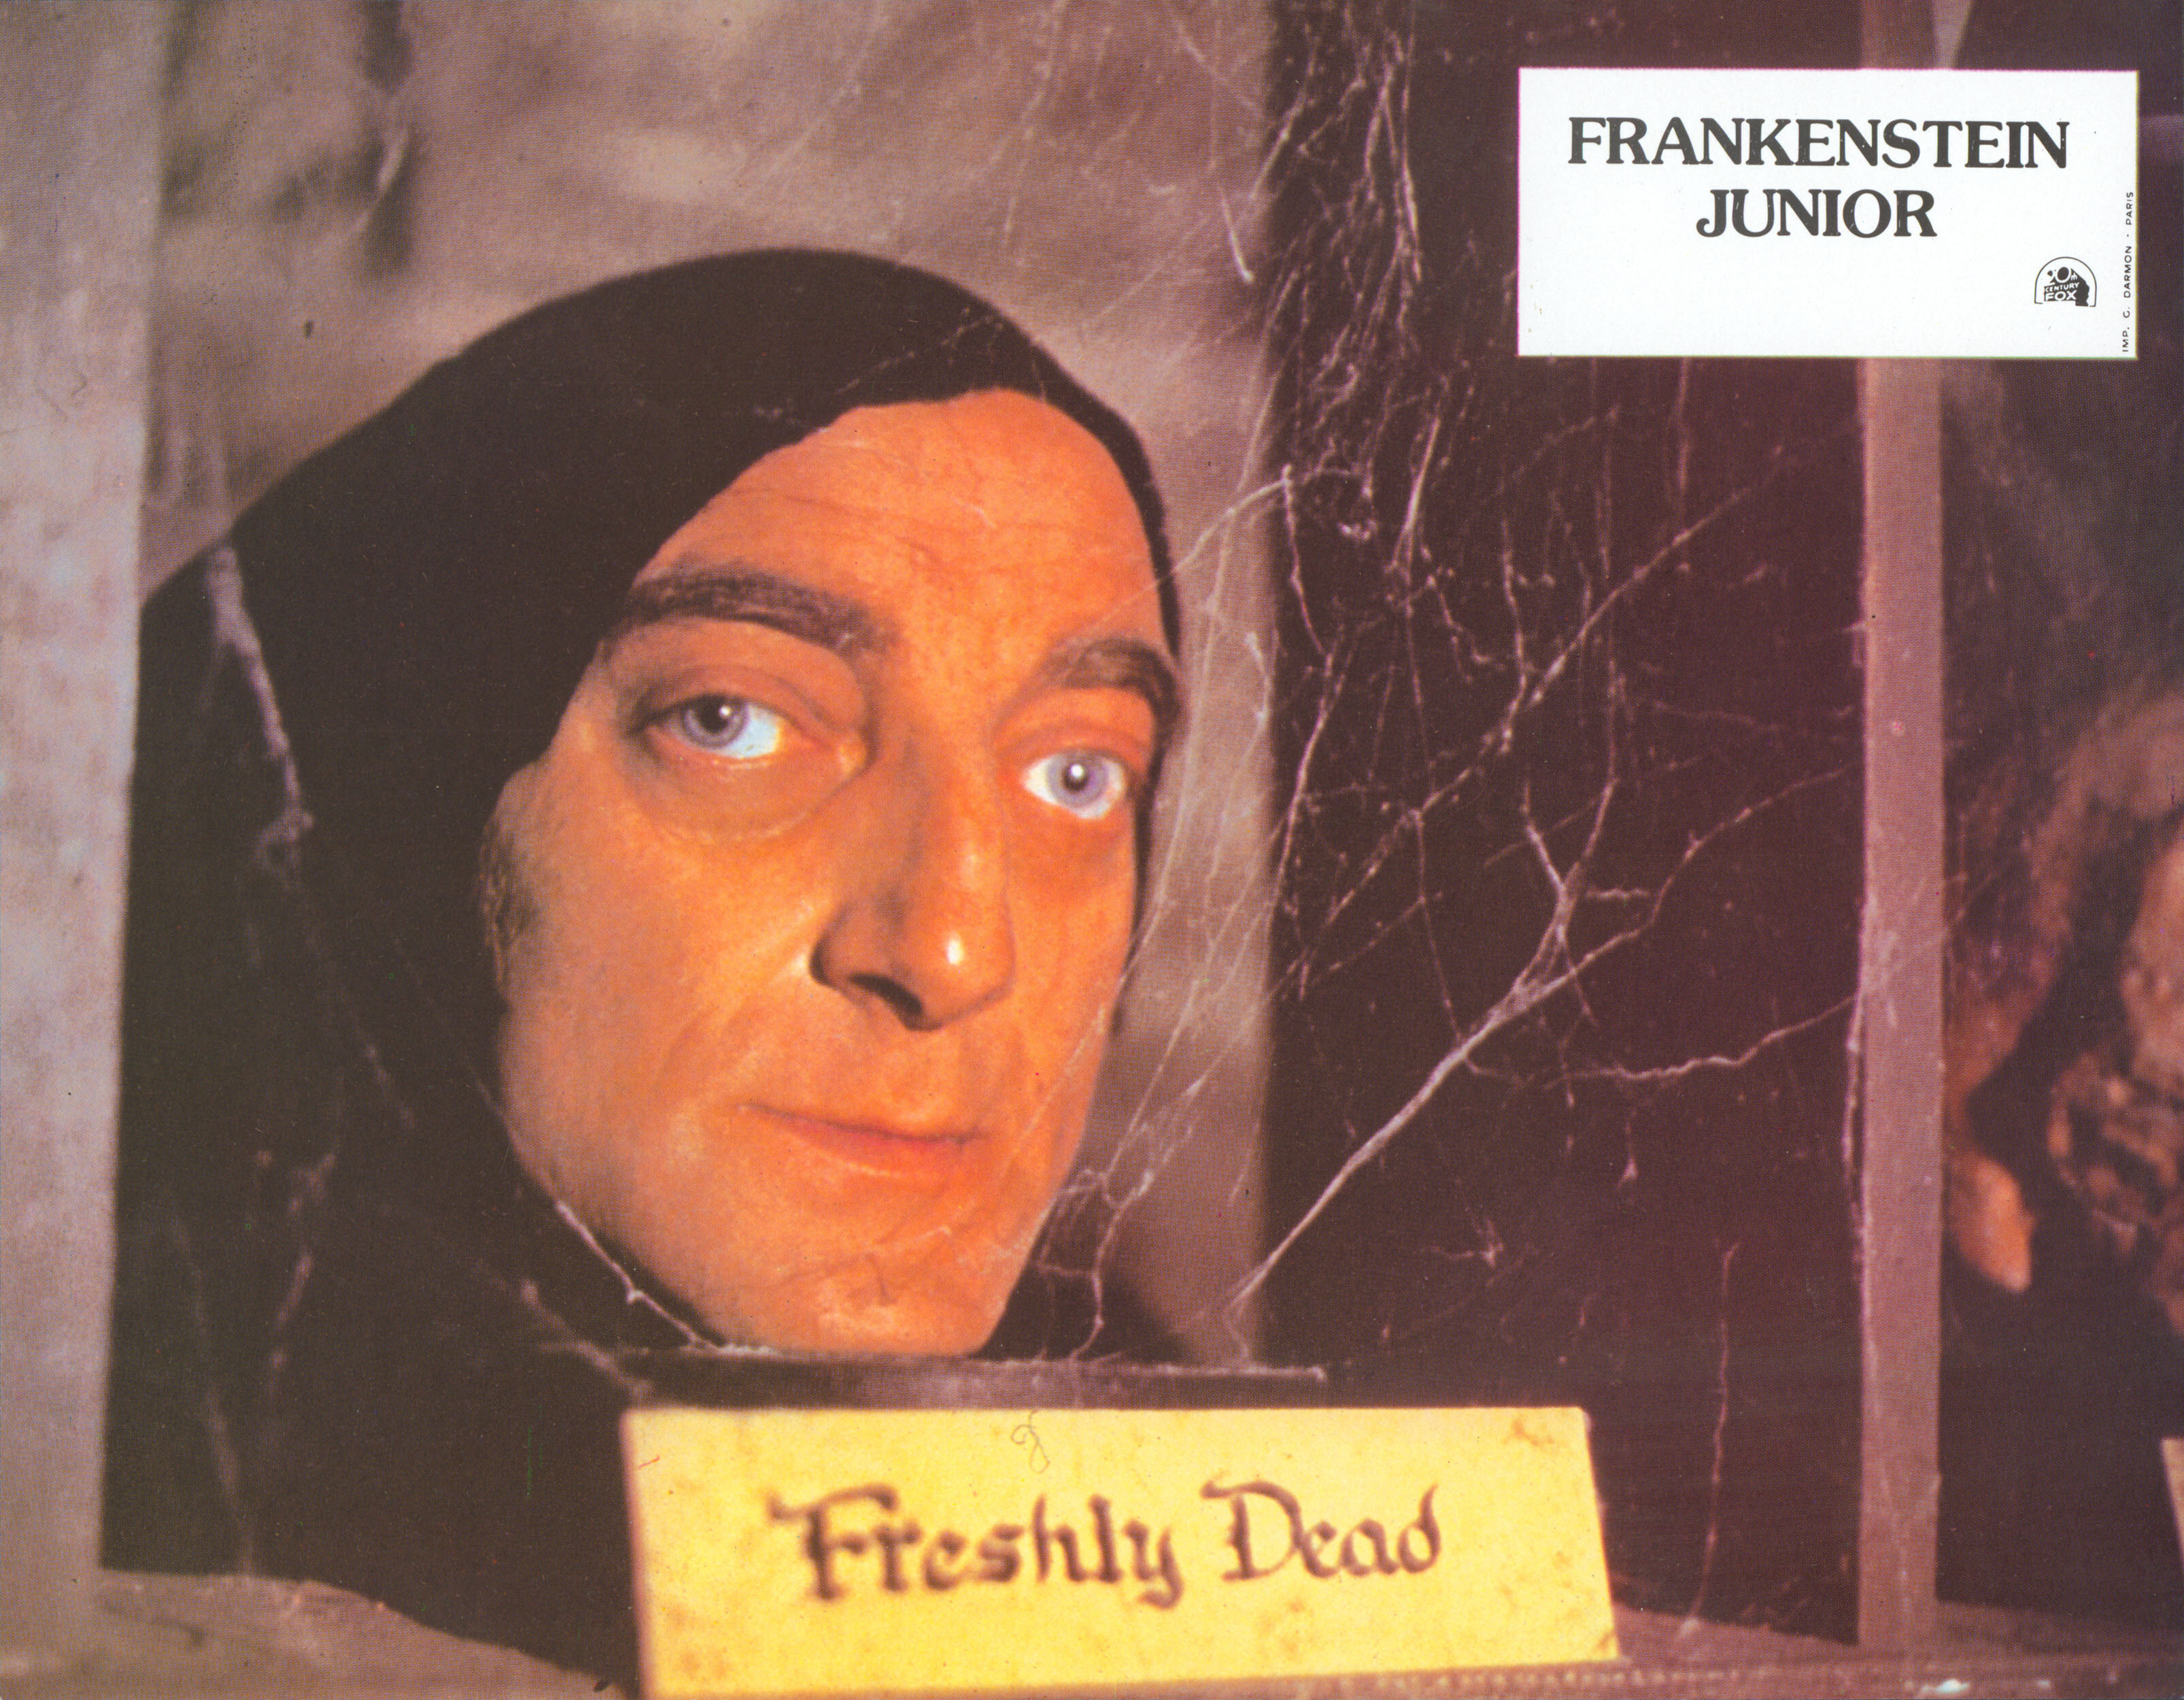 Молодой Франкенштейн (Young Frankenstein, 1974), режиссёр Мэл Брукс, французский постер к фильму (ужасы, 1974 год)_12